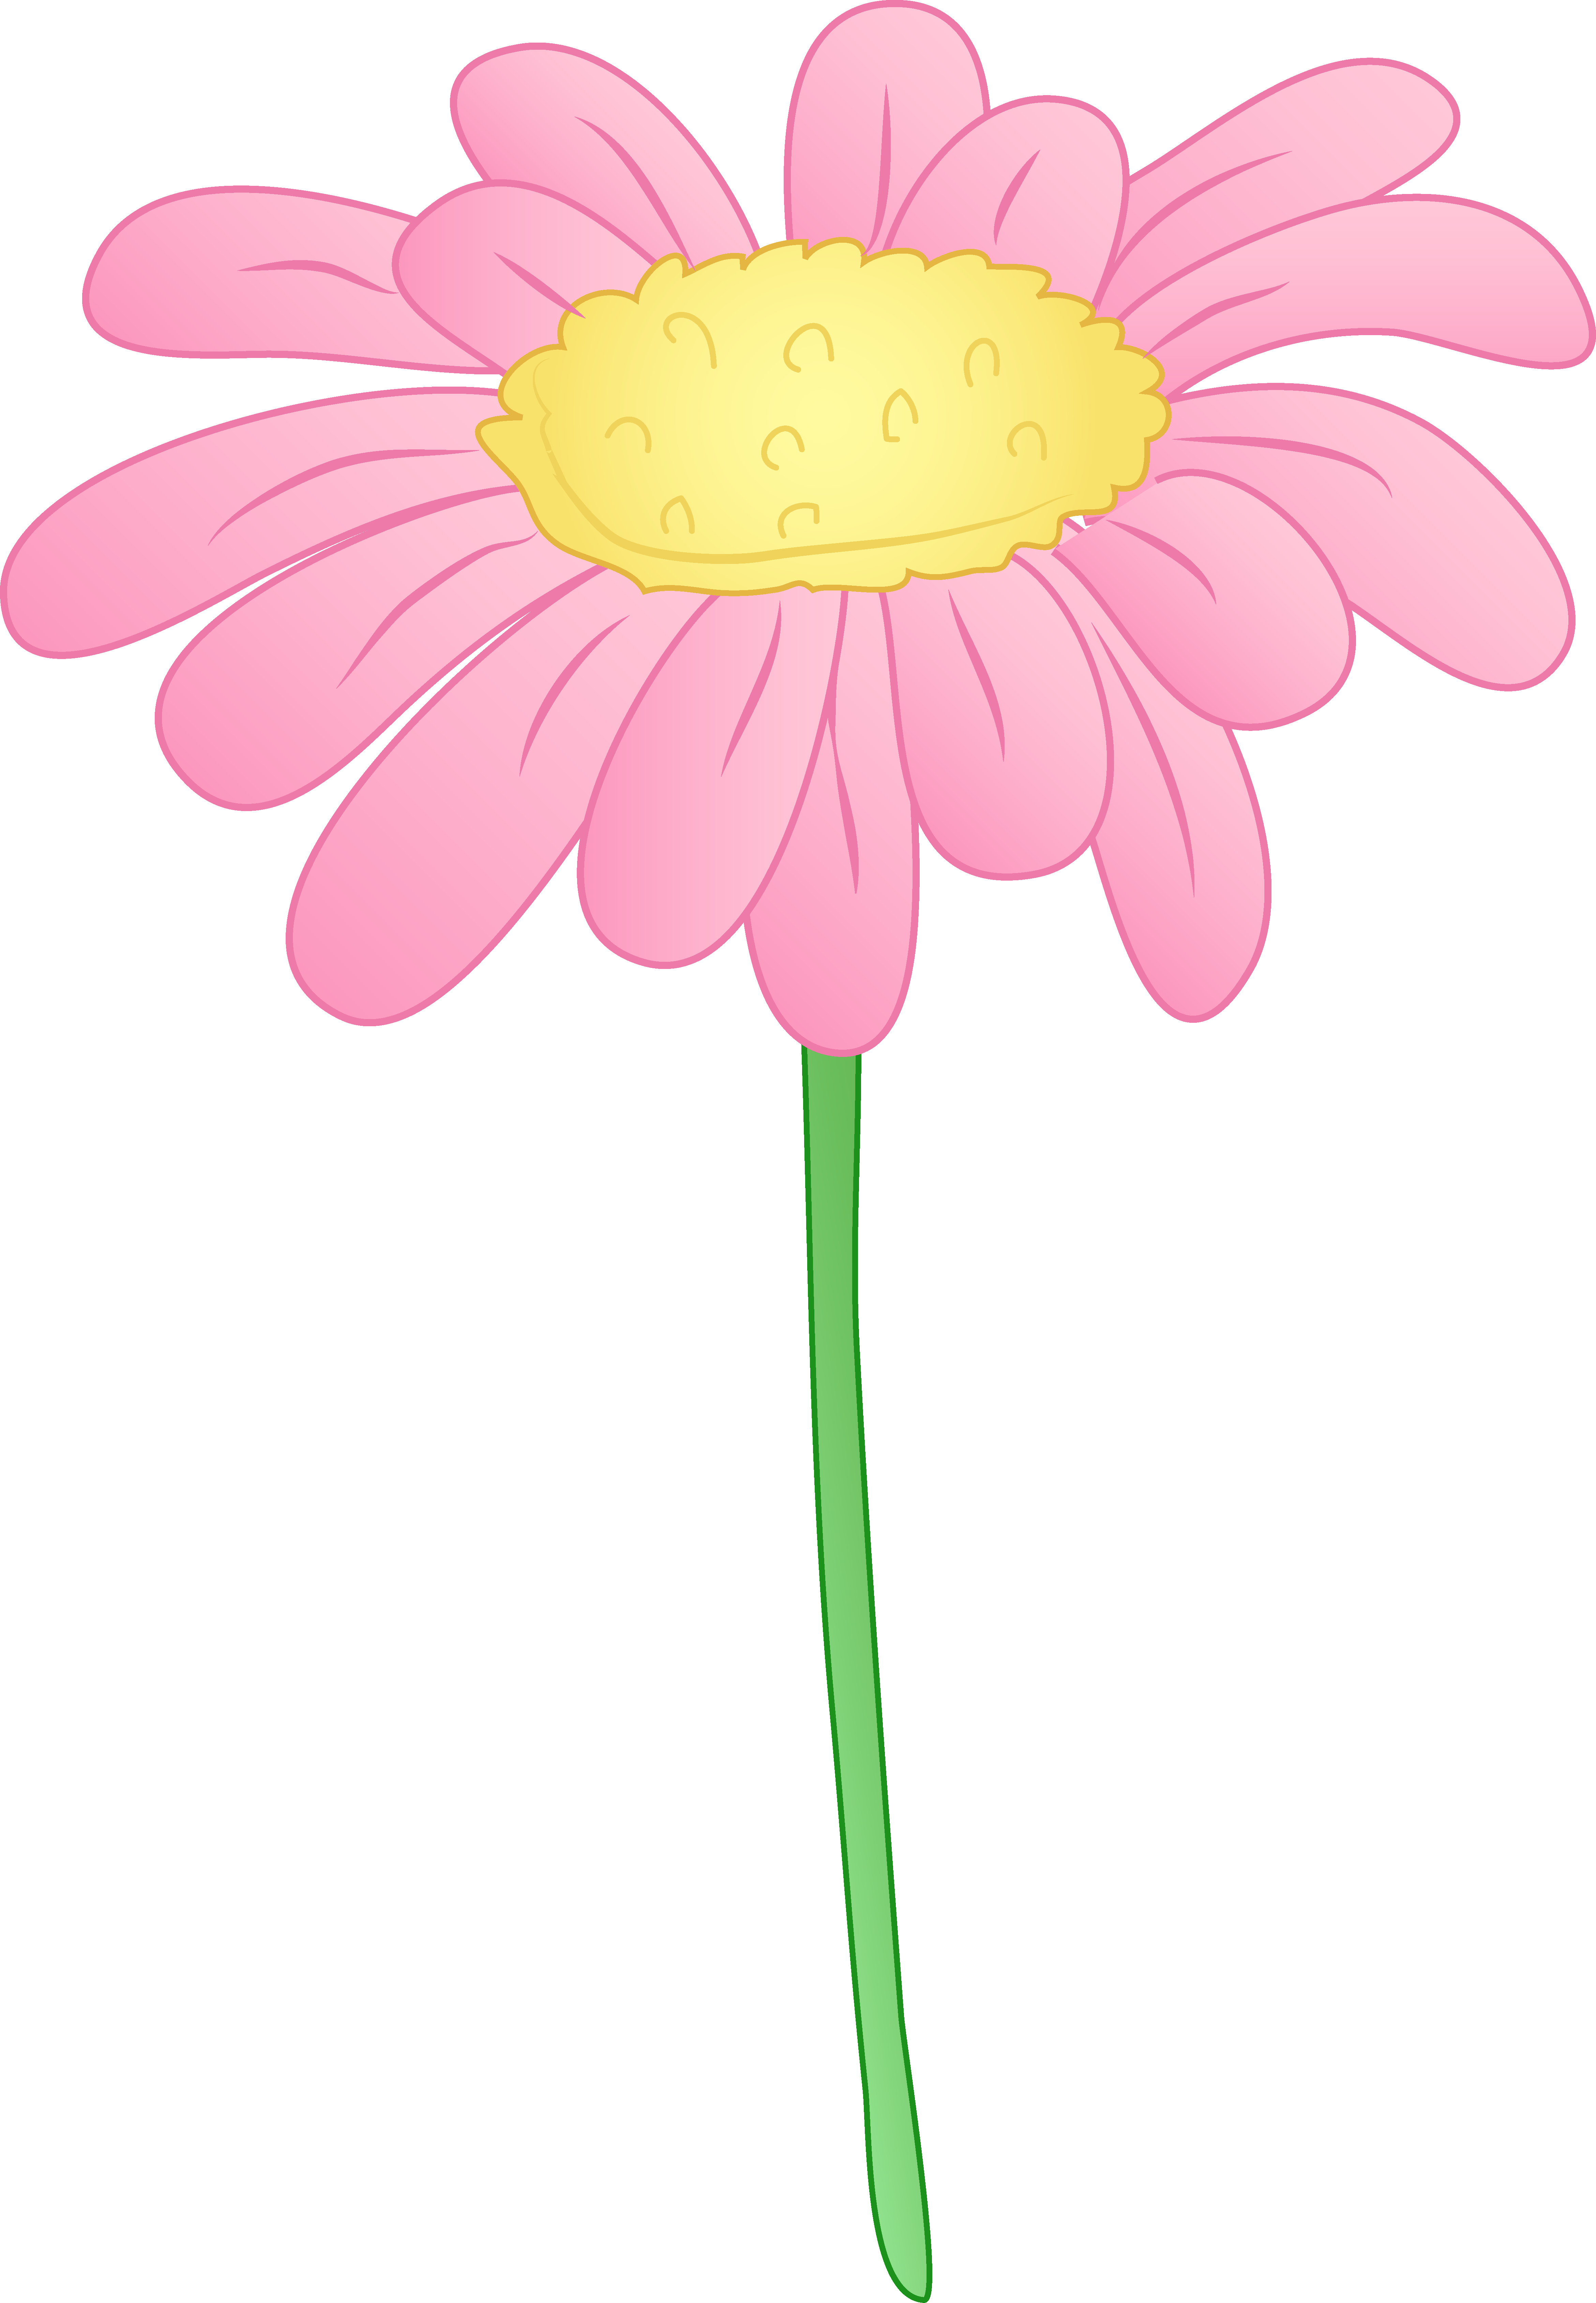 Pretty pink daisy flower free clip art clipartandscrap